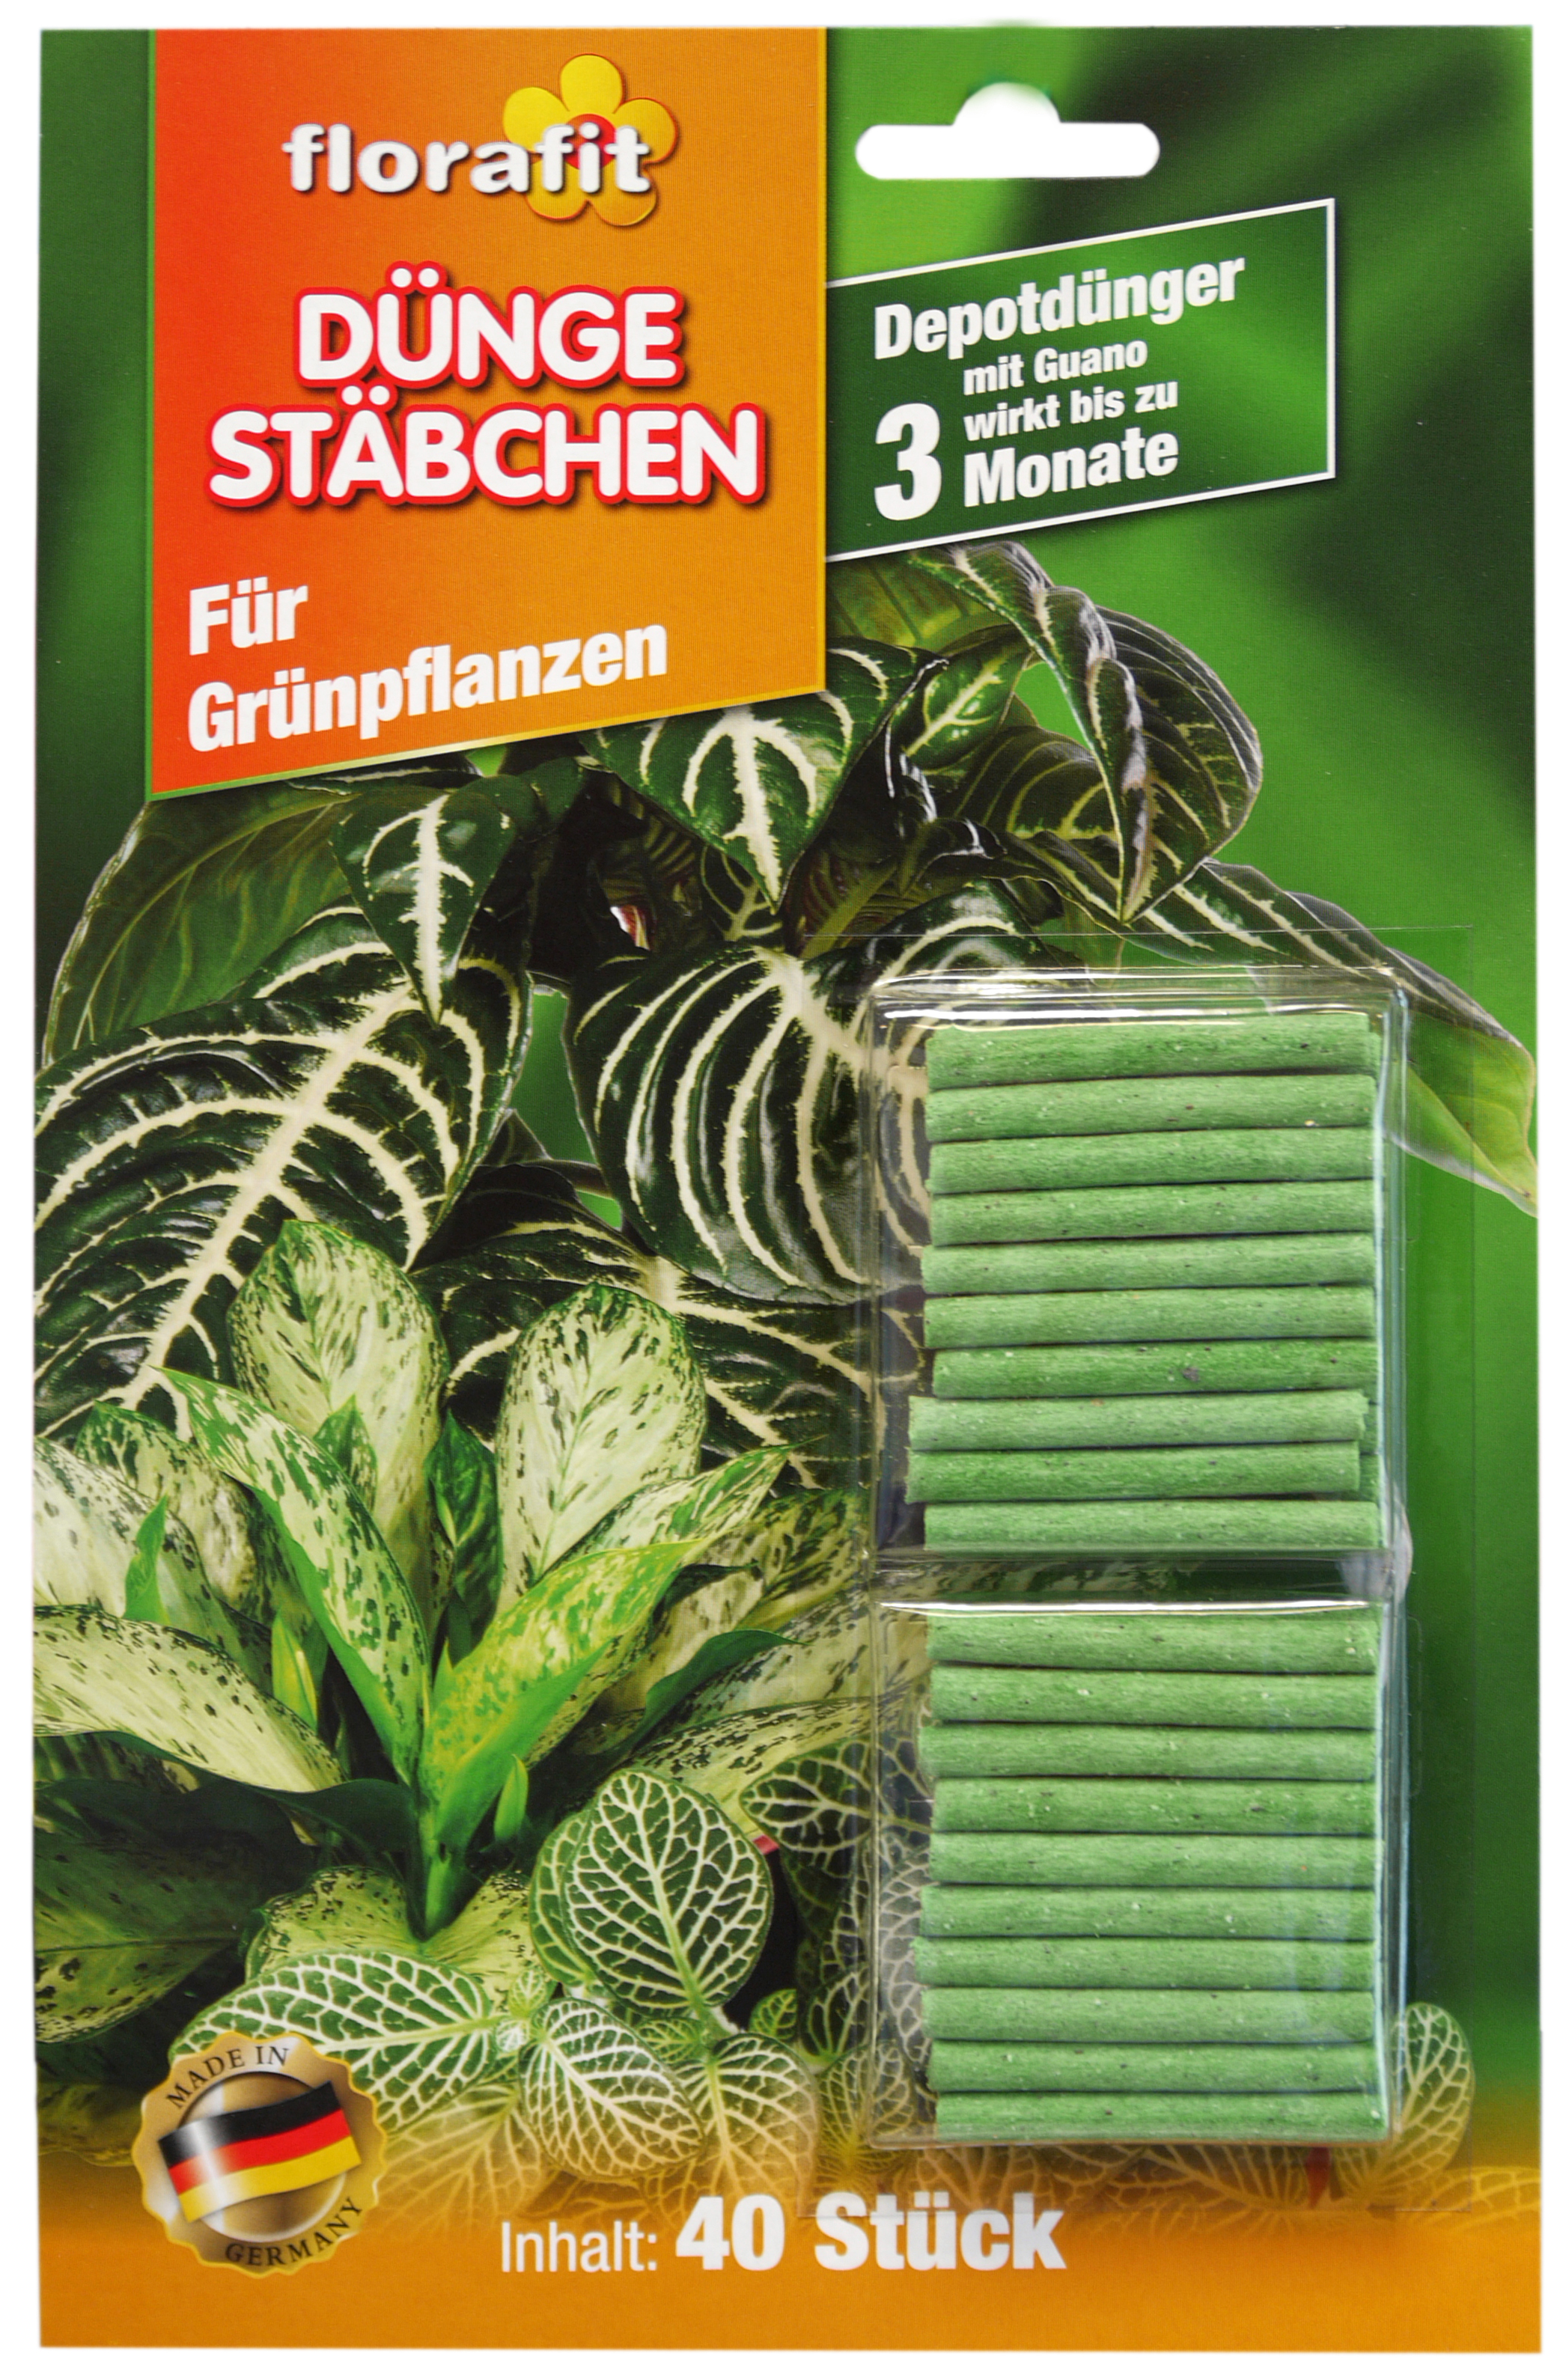 02260 - fertilizer sticks for green plants, 40 pcs blistered